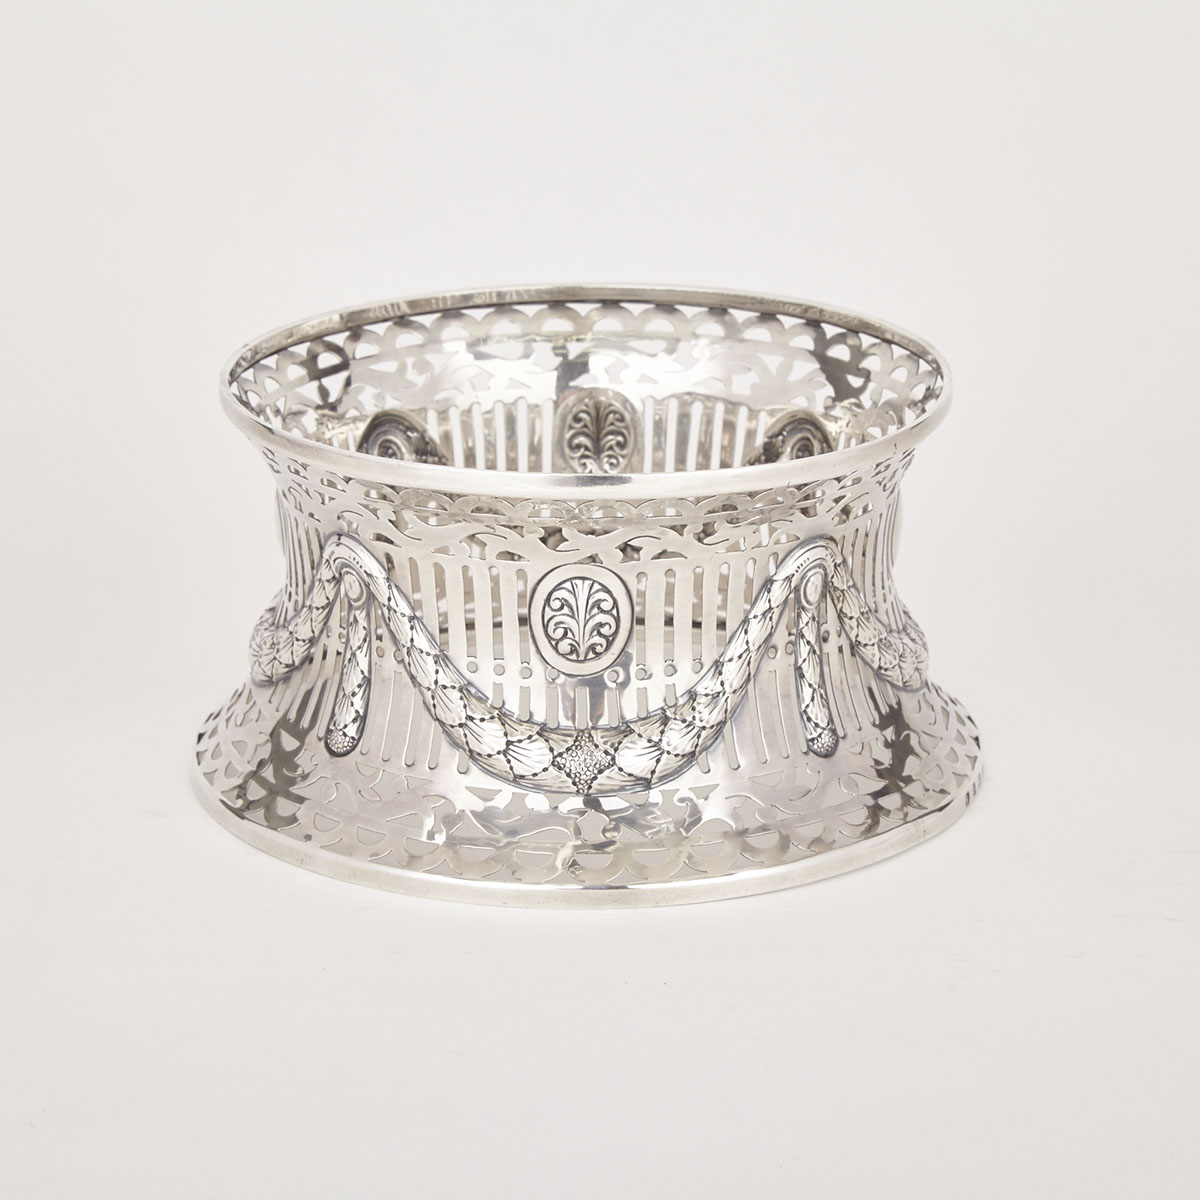 English Silver Pierced Dish Ring, Williams Ltd., Birmingham, 1910